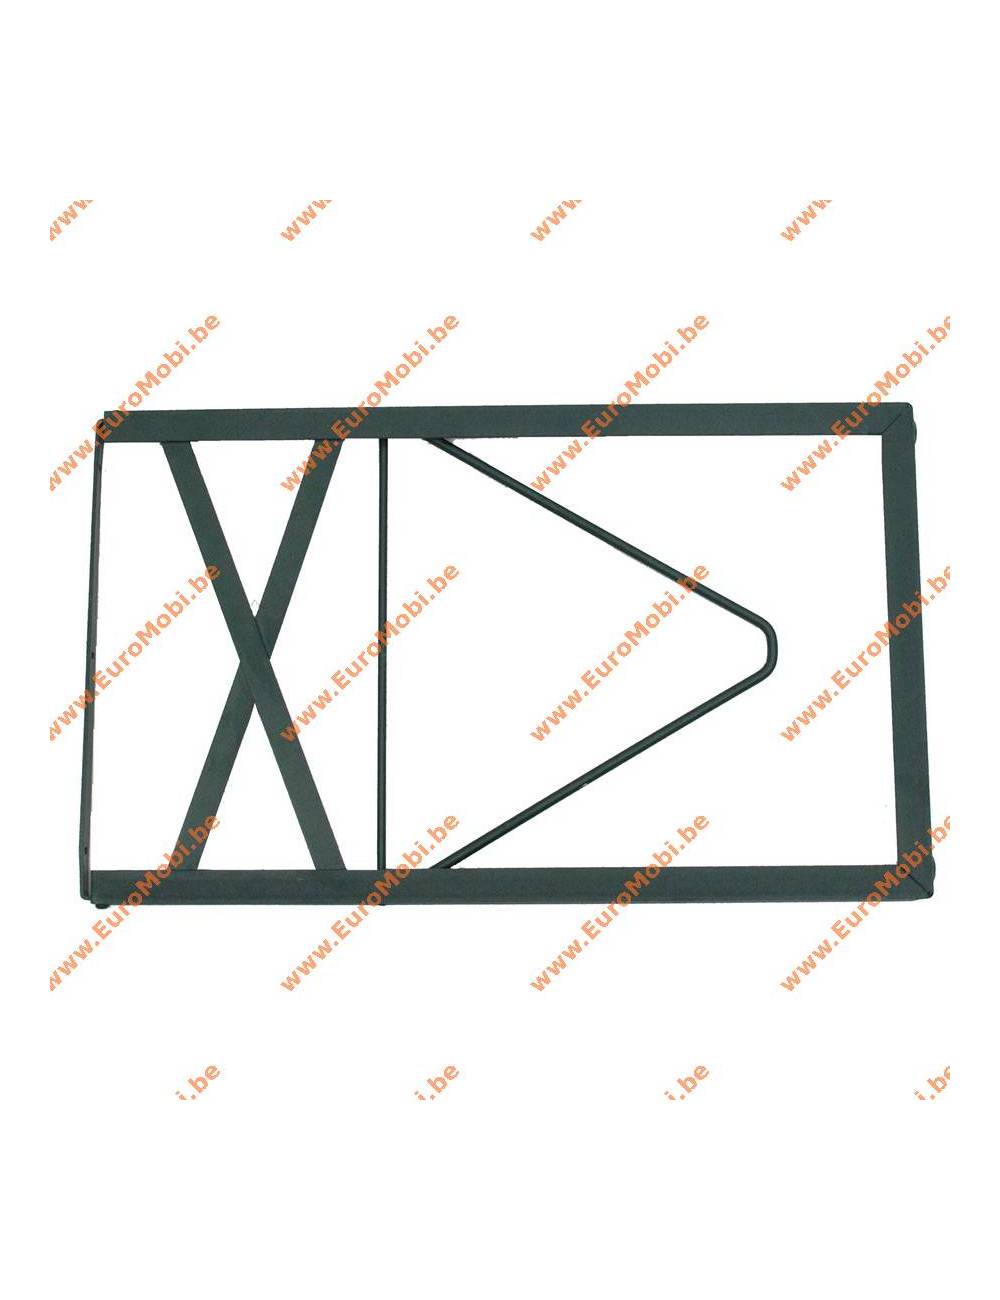 Onderstel biertafel 220 x 50 - 70cm groen (set, 2x)